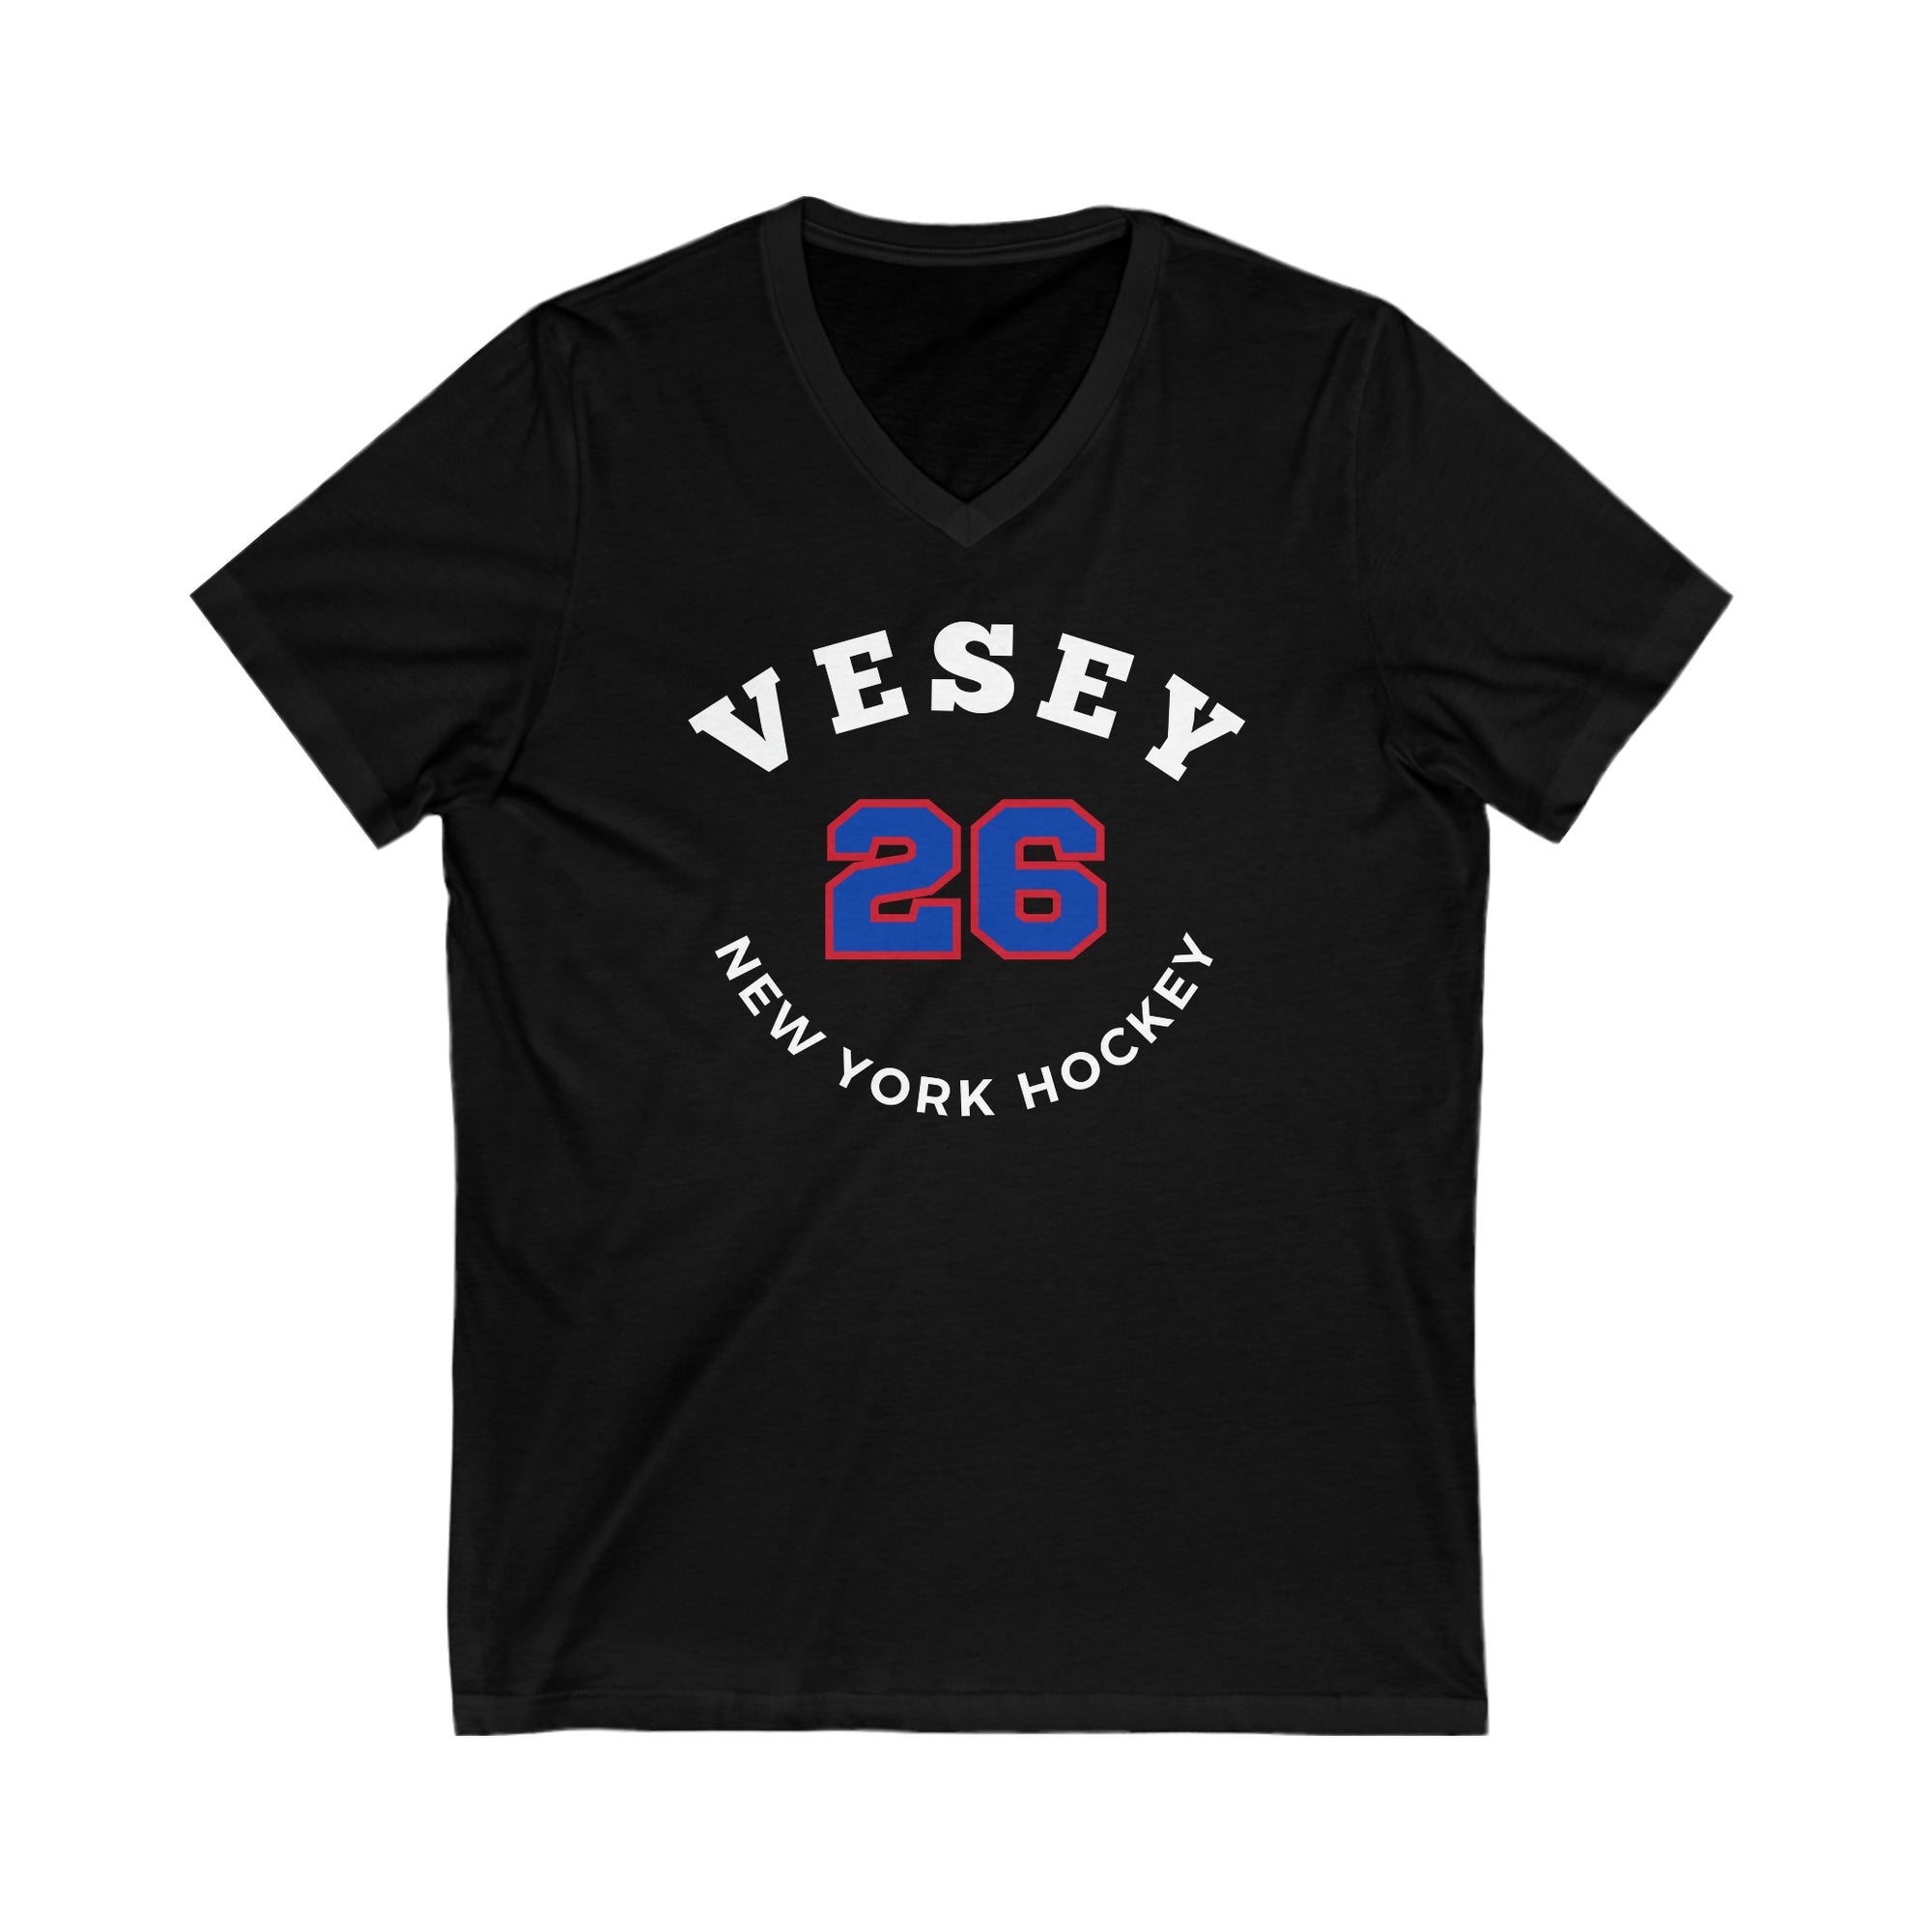 Vesey 26 New York Hockey Number Arch Design Unisex V-Neck Tee